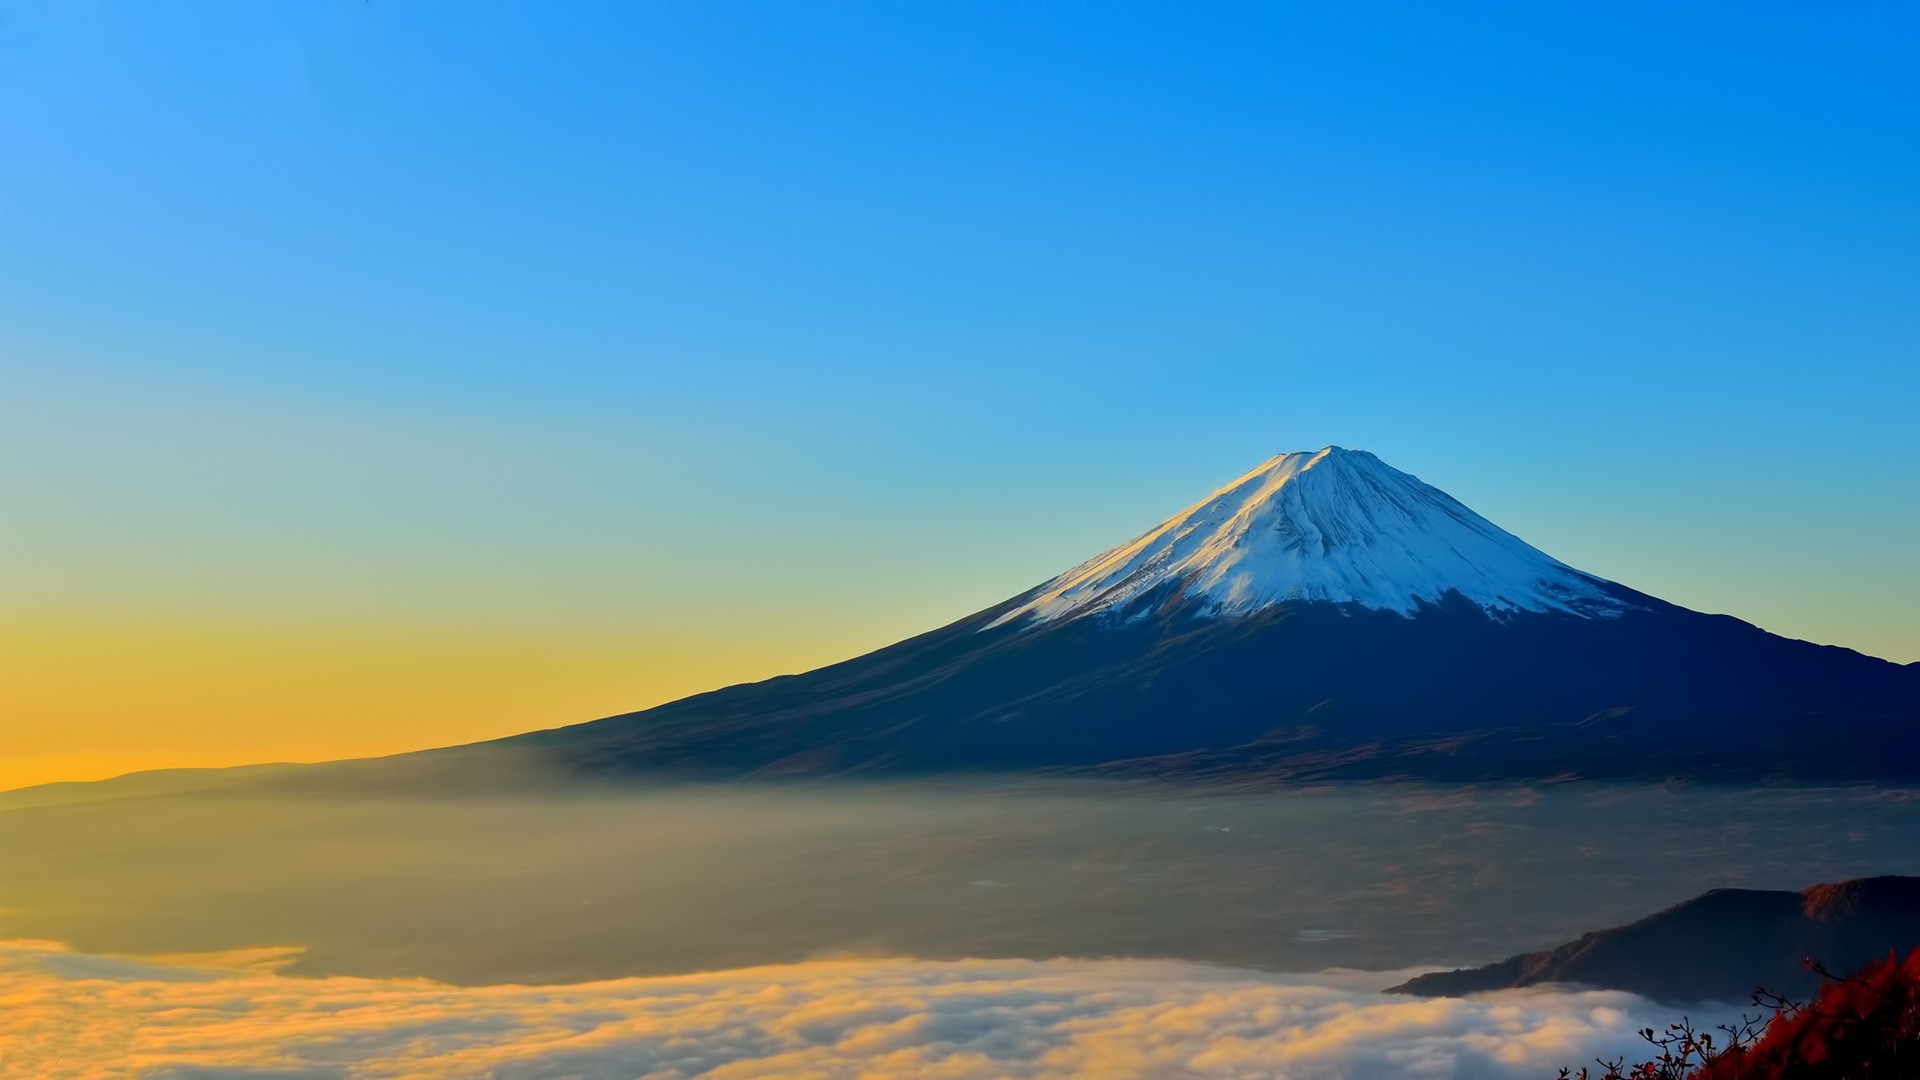 General 1920x1080 landscape Mount Fuji Japan mist Asia snowy peak volcano